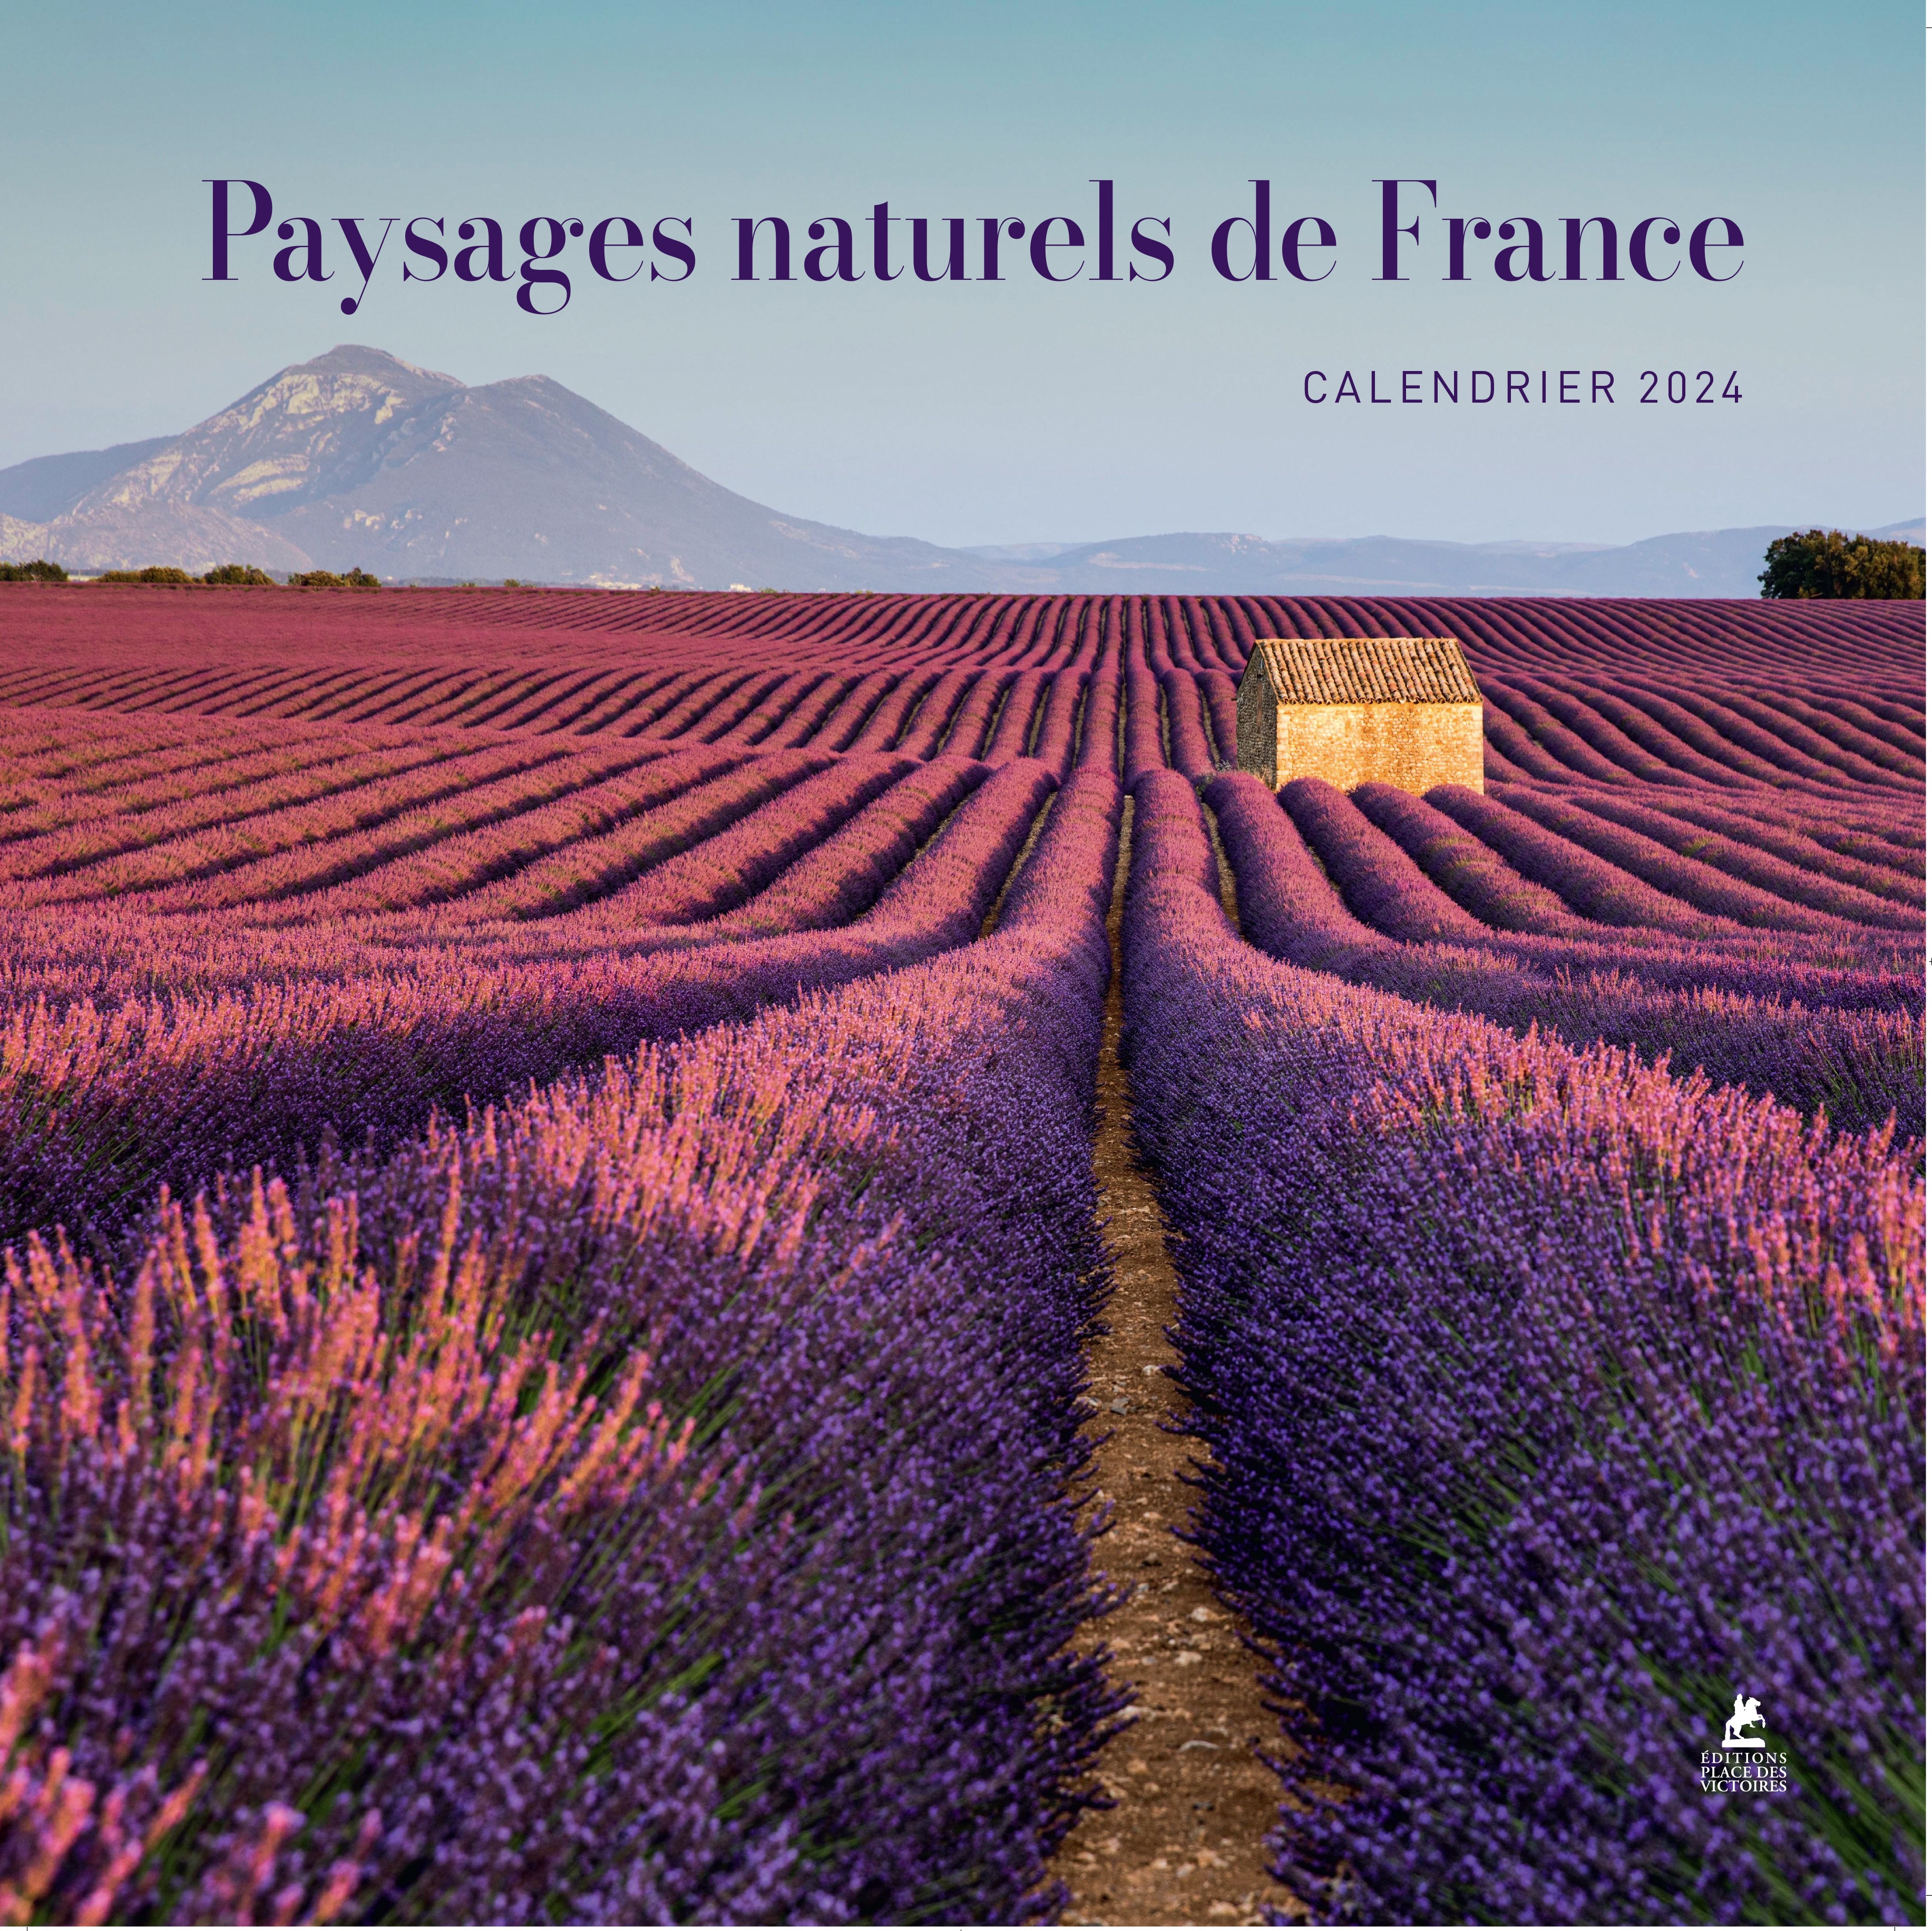 Calendrier paysages naturels de France 2024